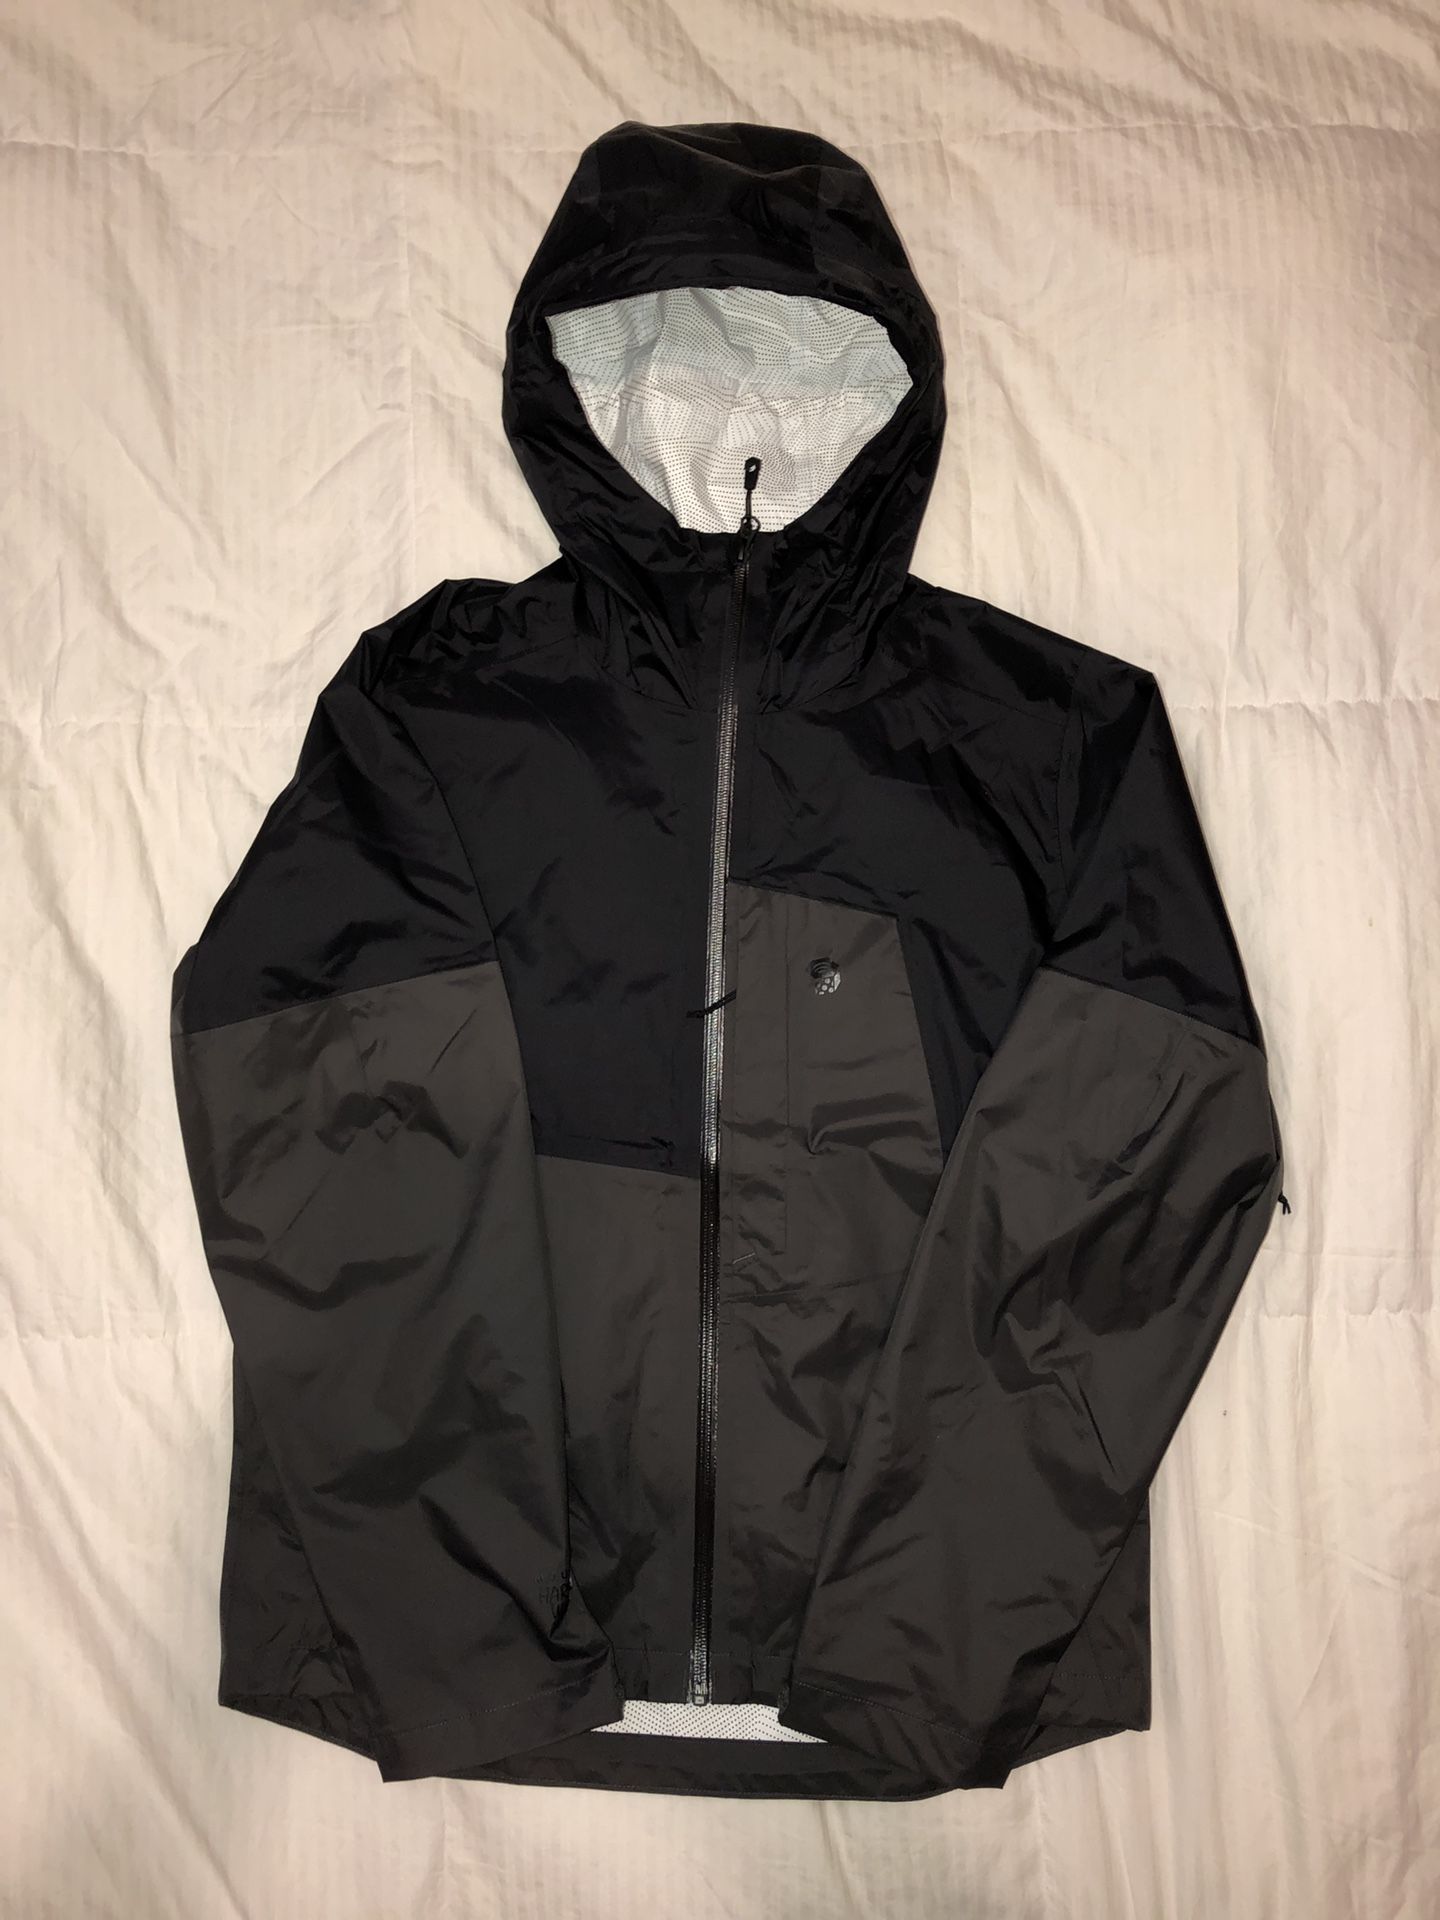 NEW Mountain Hardwear Exponent 2 Waterproof Rain Jacket Men’s Small